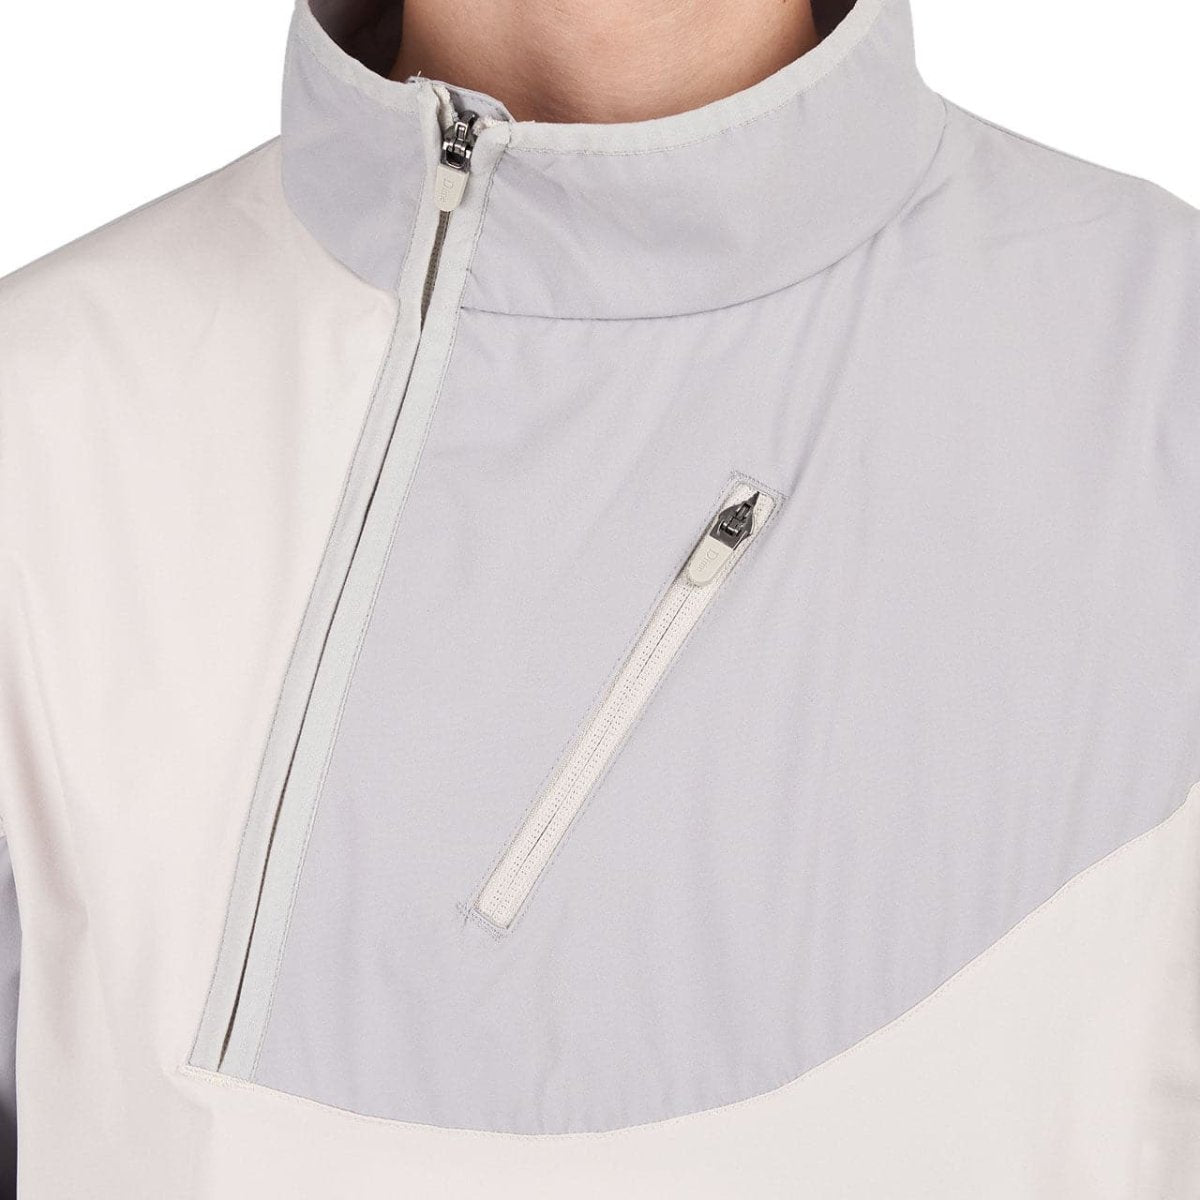 Dime Range Pullover Jacket (Grau)  - Allike Store